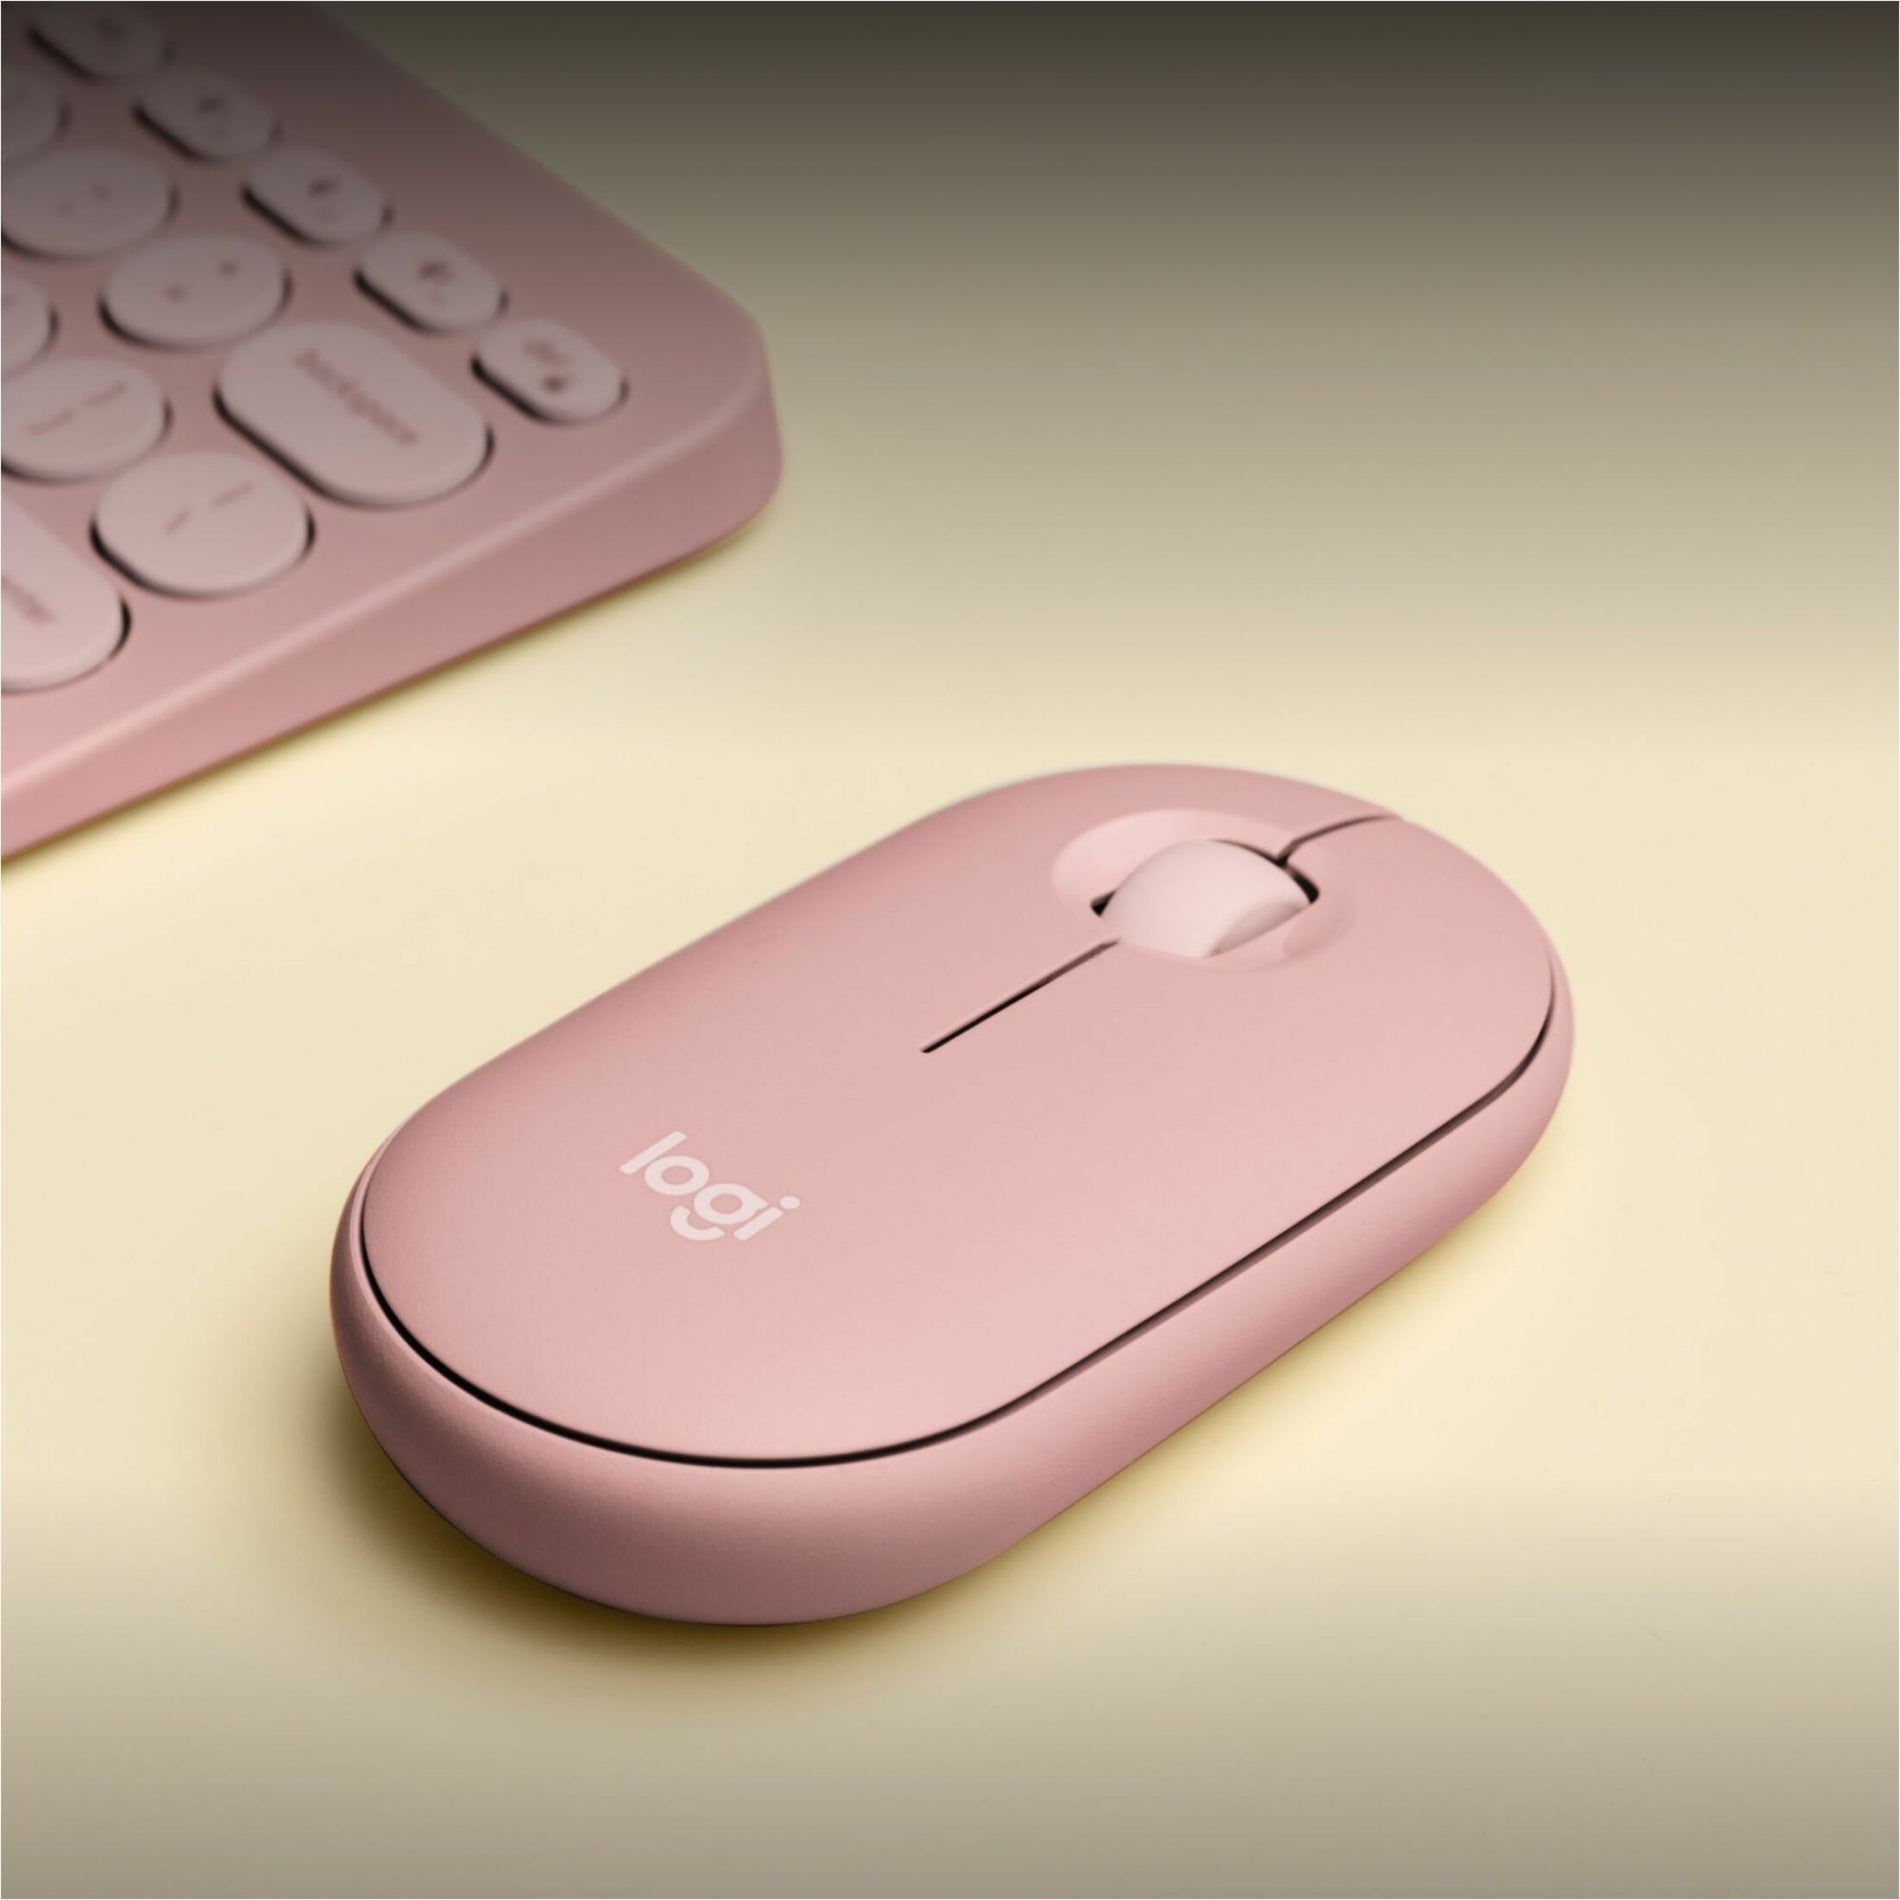 Logitech 910-007023 Pebble 2 M350s Mouse, Tonal Rose, Symmetrical Ergonomic Fit, Bluetooth Wireless